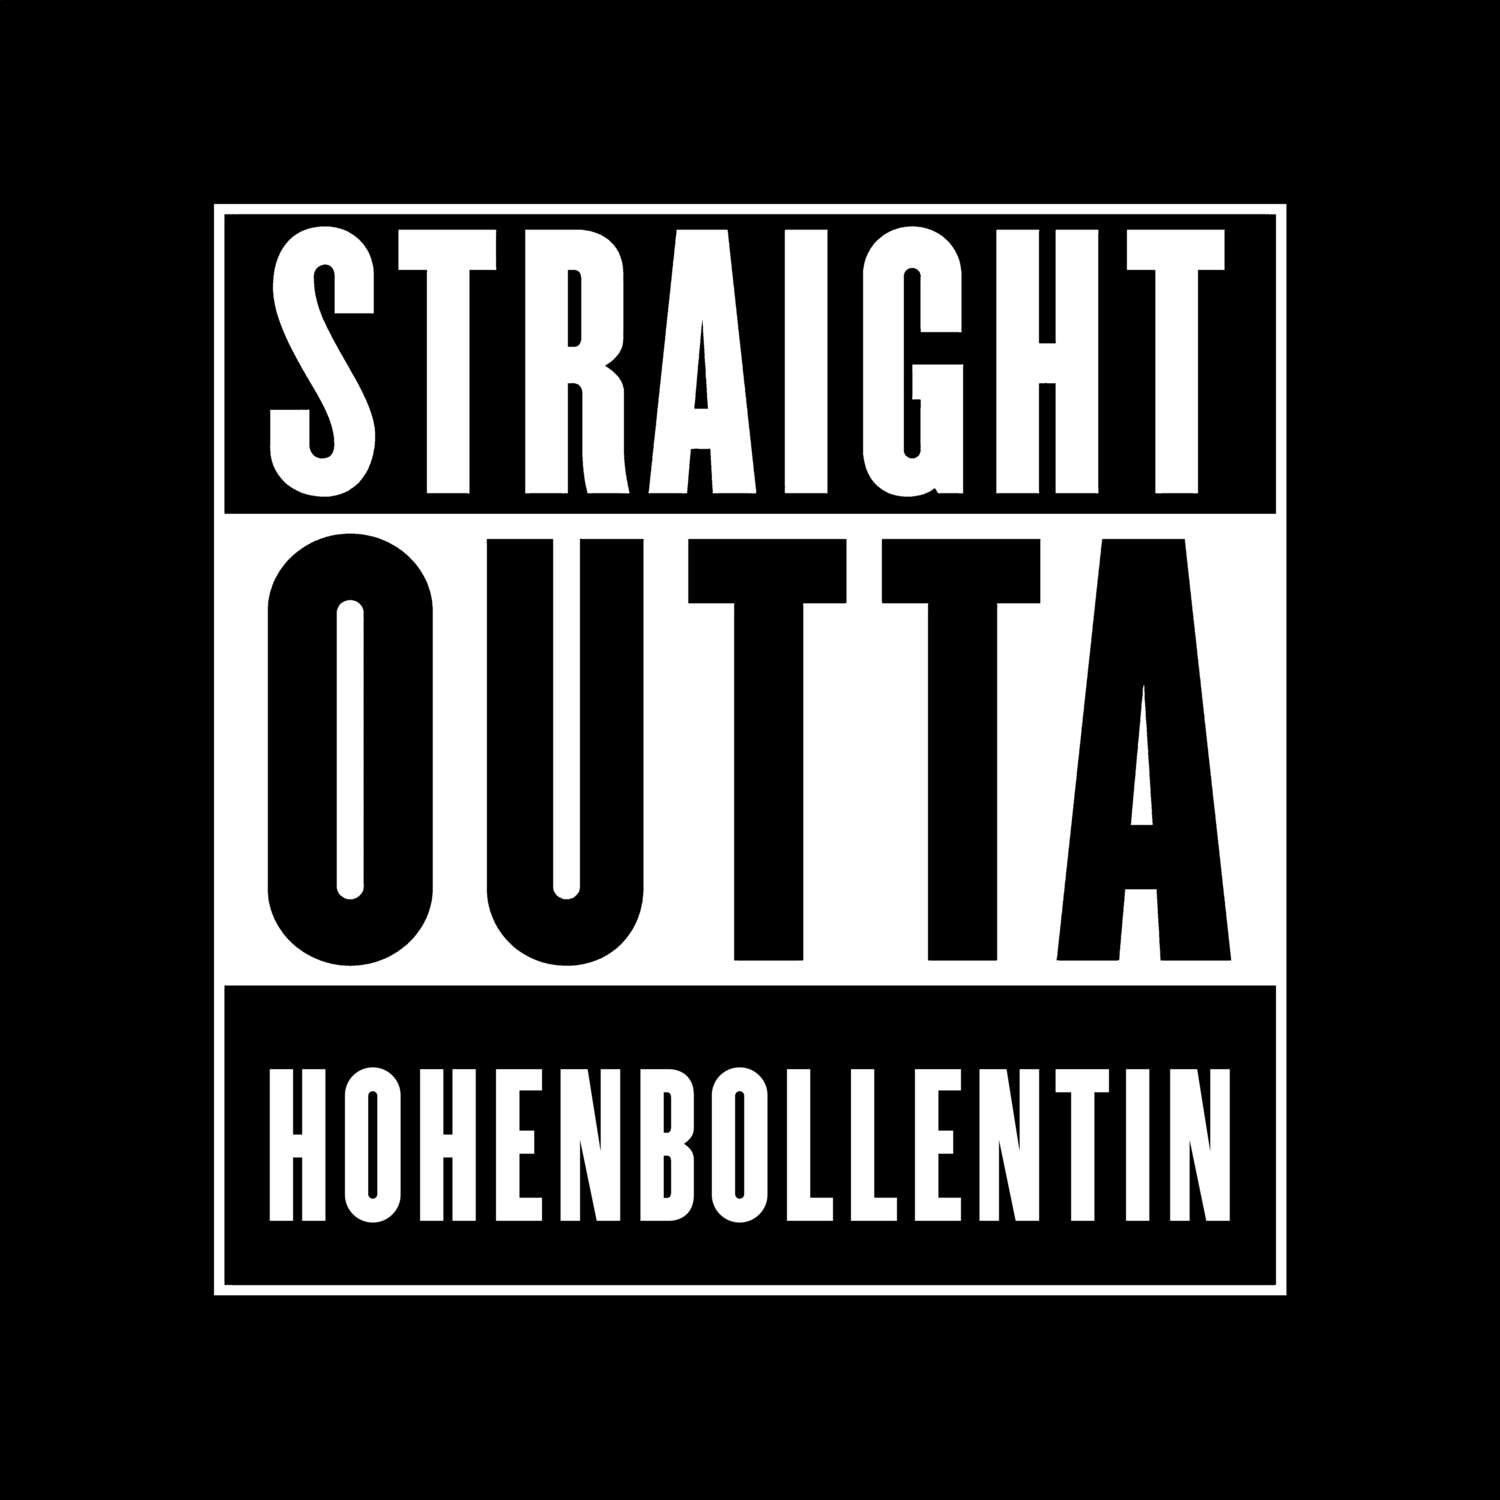 Hohenbollentin T-Shirt »Straight Outta«